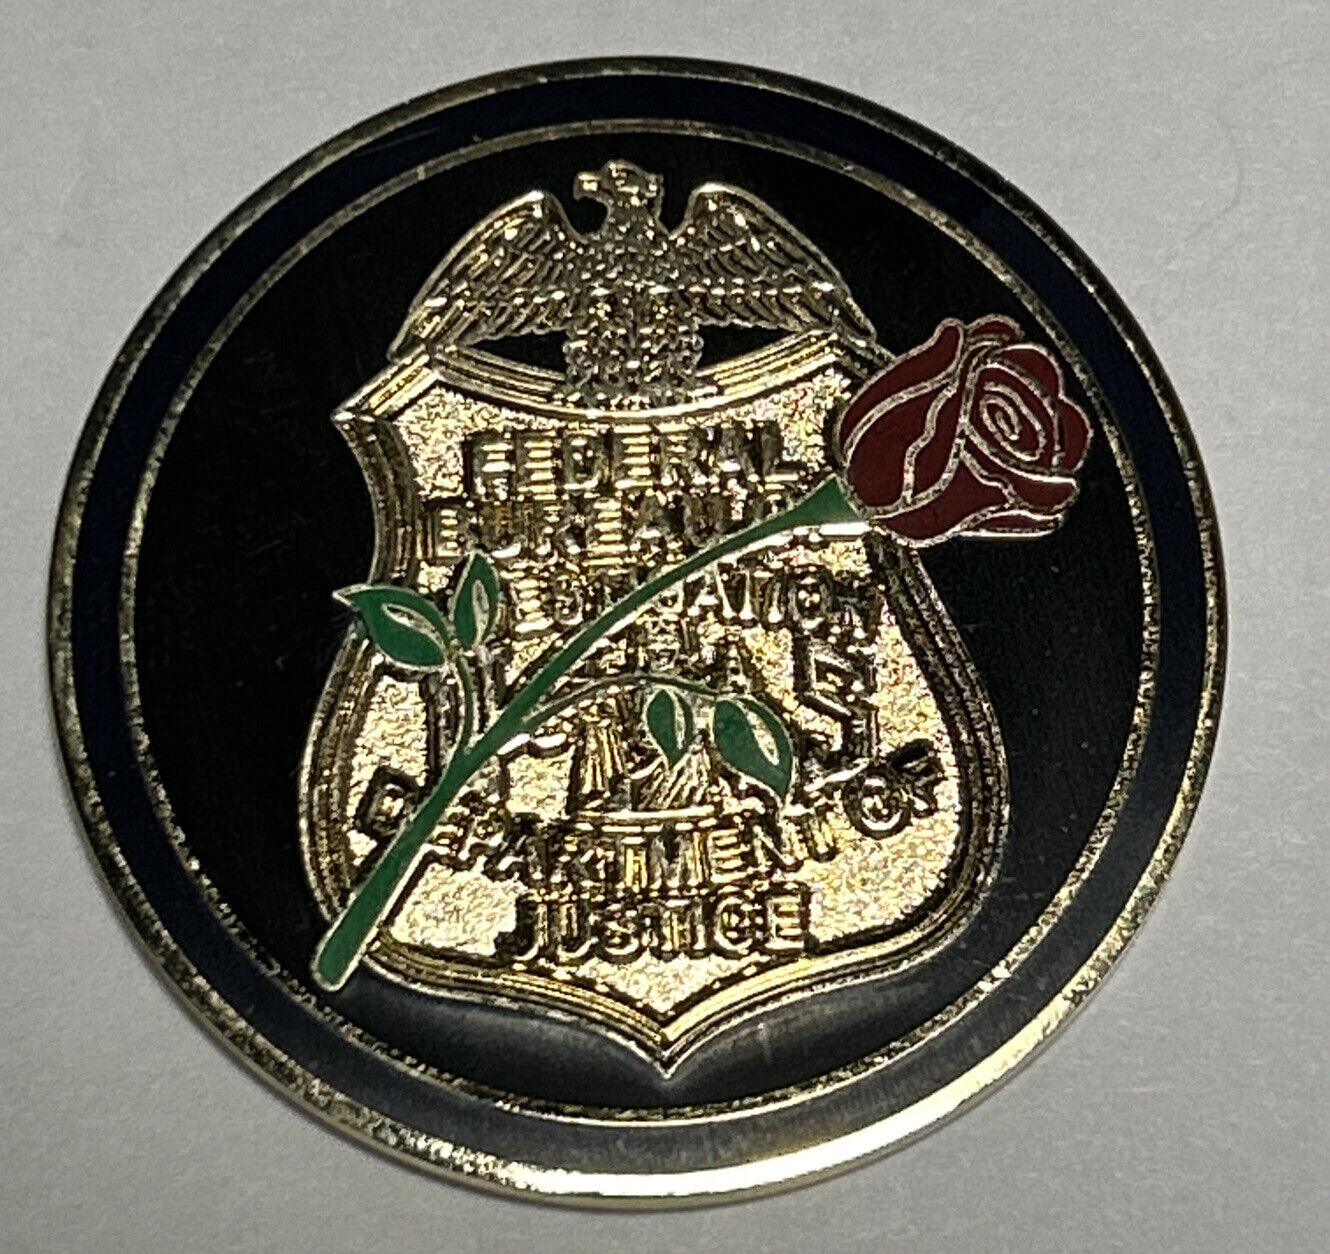 2018 FBI Law Enforcement Memorial Challenge Coin